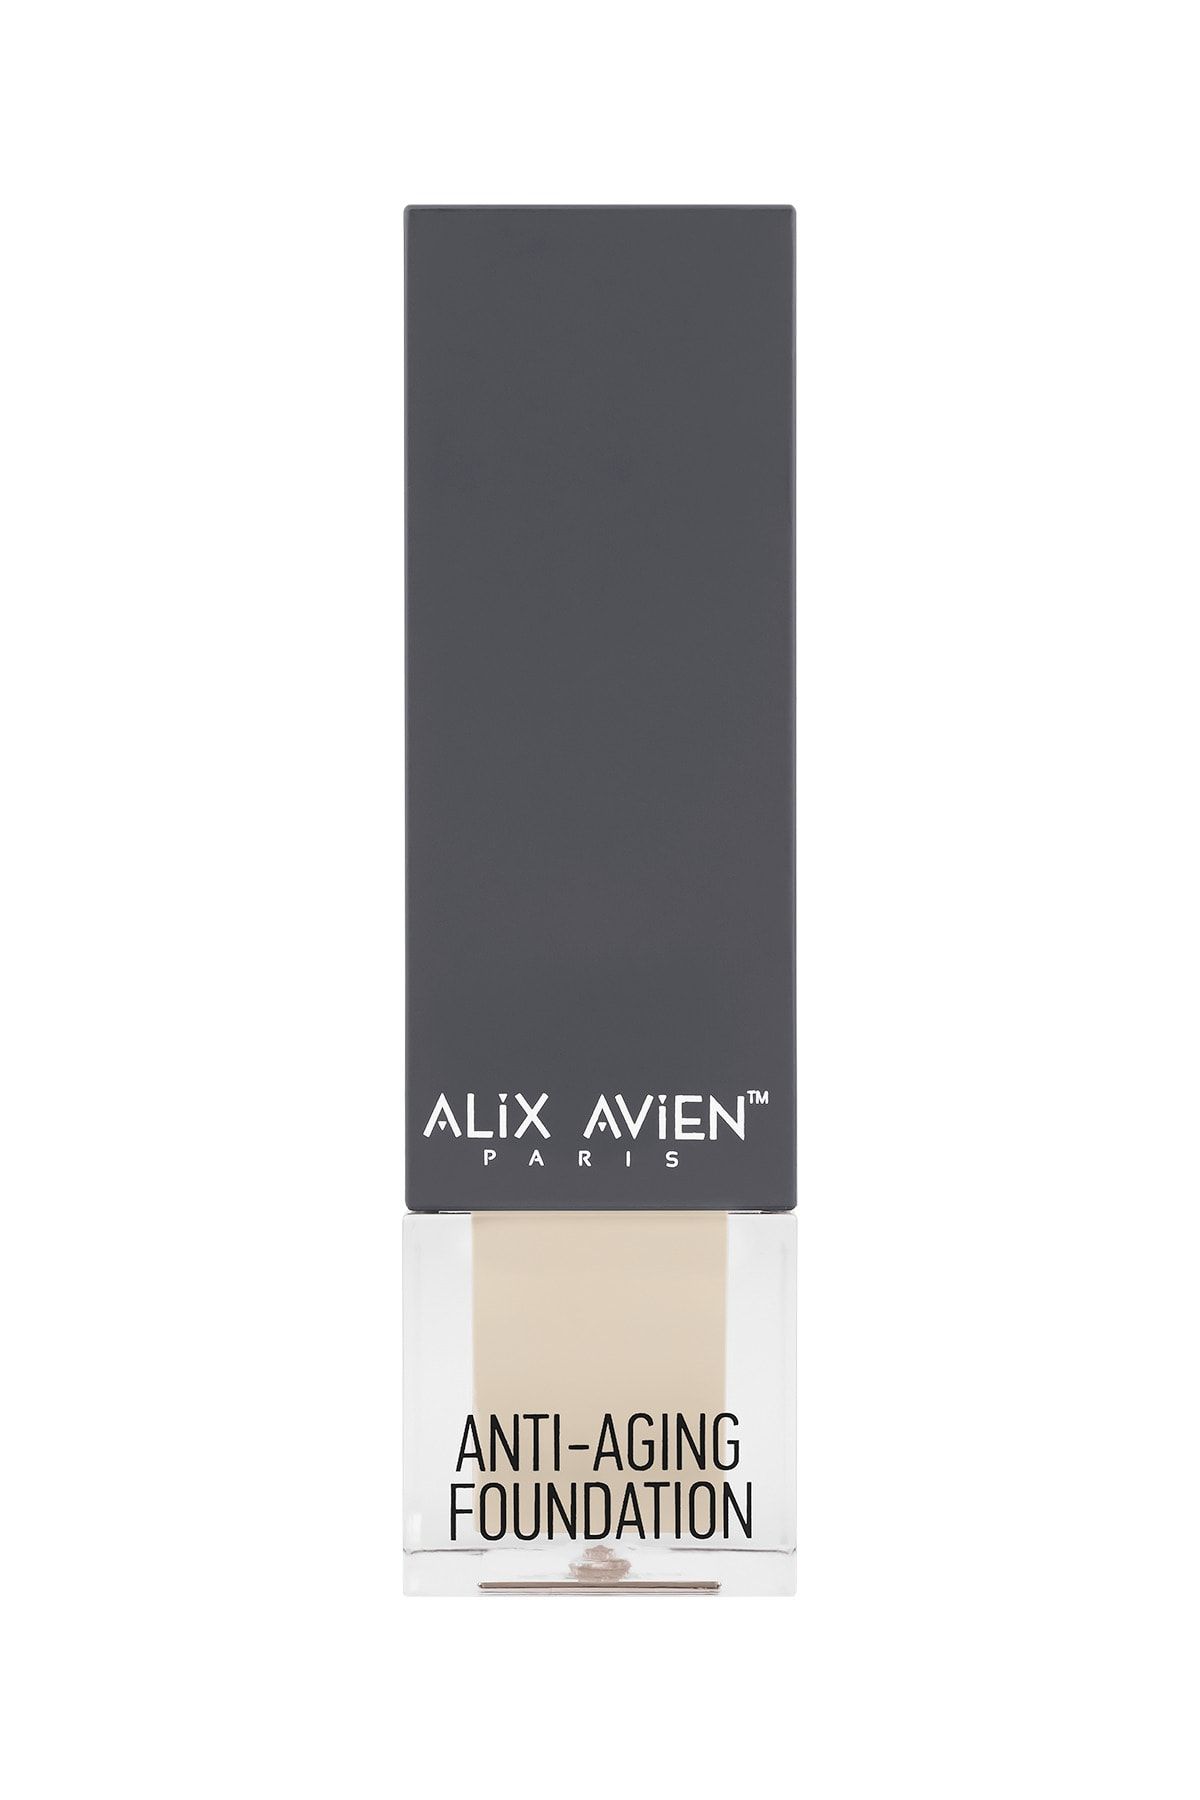 Alix Avien پایه ضد پیری با SPF 15 رنگ بژ روشن 501 35 میلی لیتر